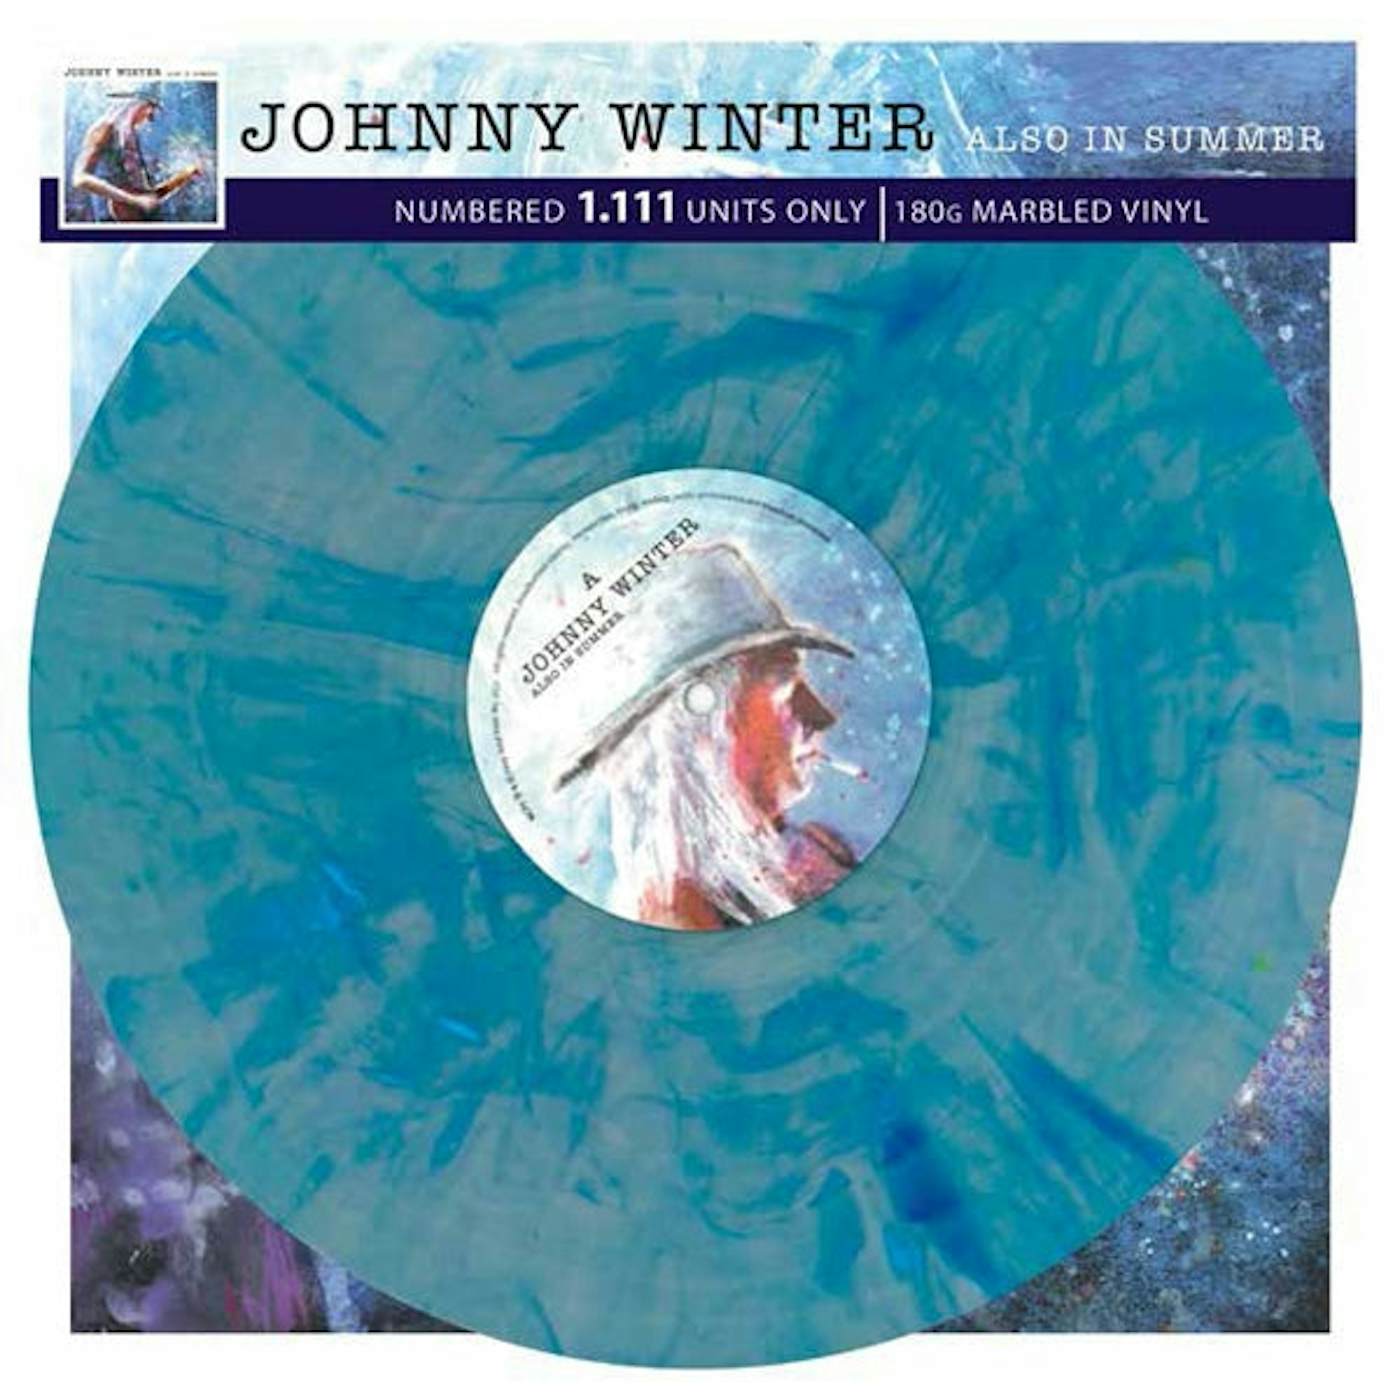 Johnny Winter LP - Also In Summer (Vinyl)